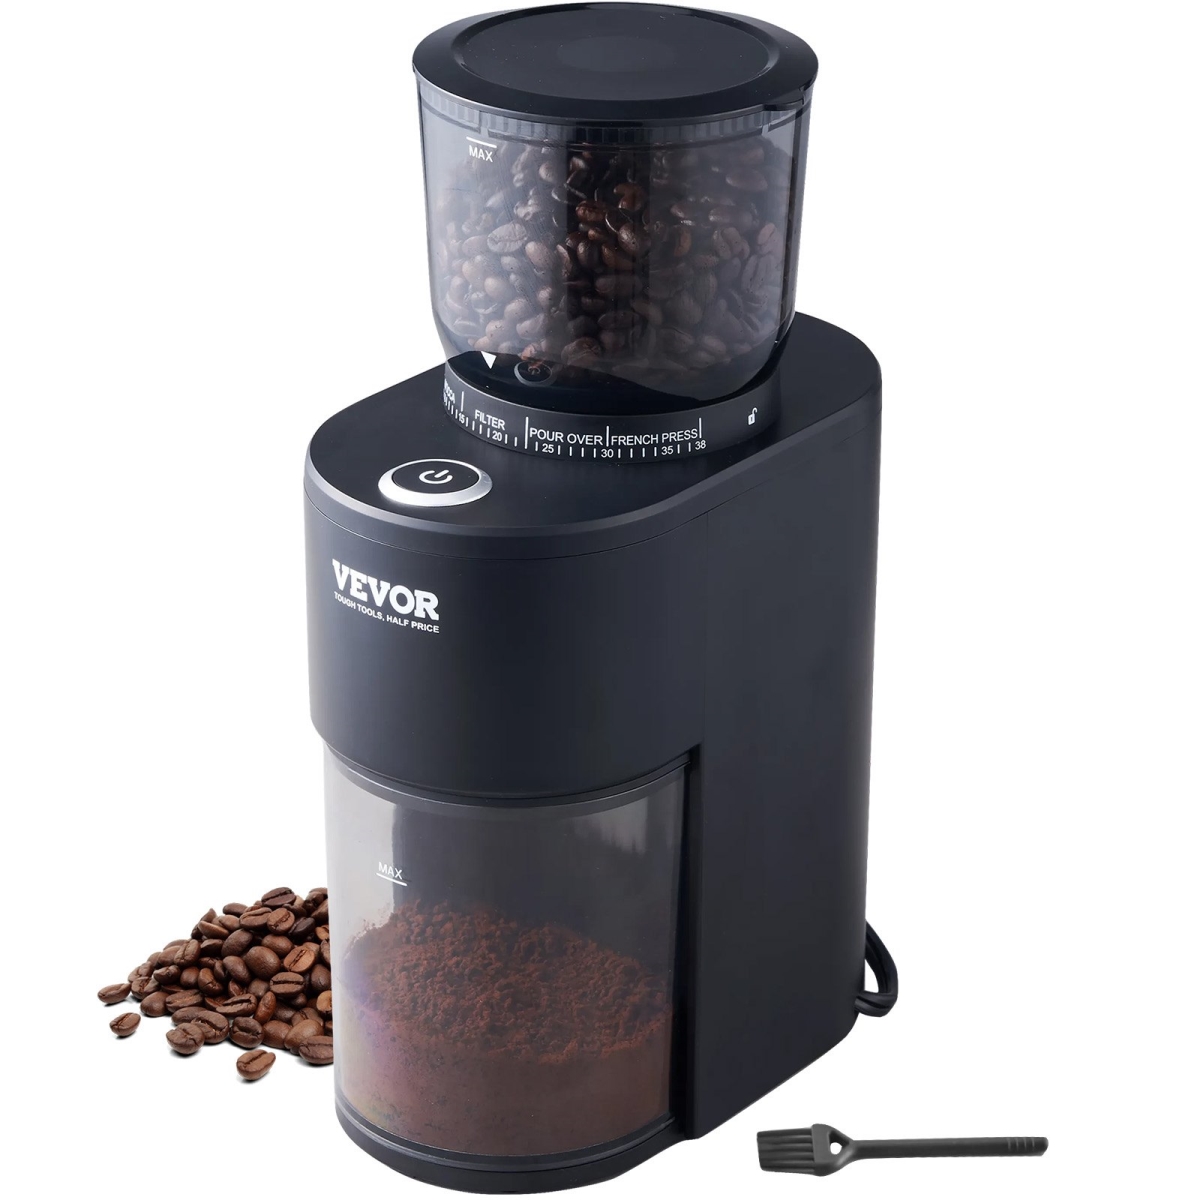 Picture of Vevor ZDKFYMJJJXS40JRH4V1 5.3 oz Espresso Coffee Grinder with 38 Precise Conical